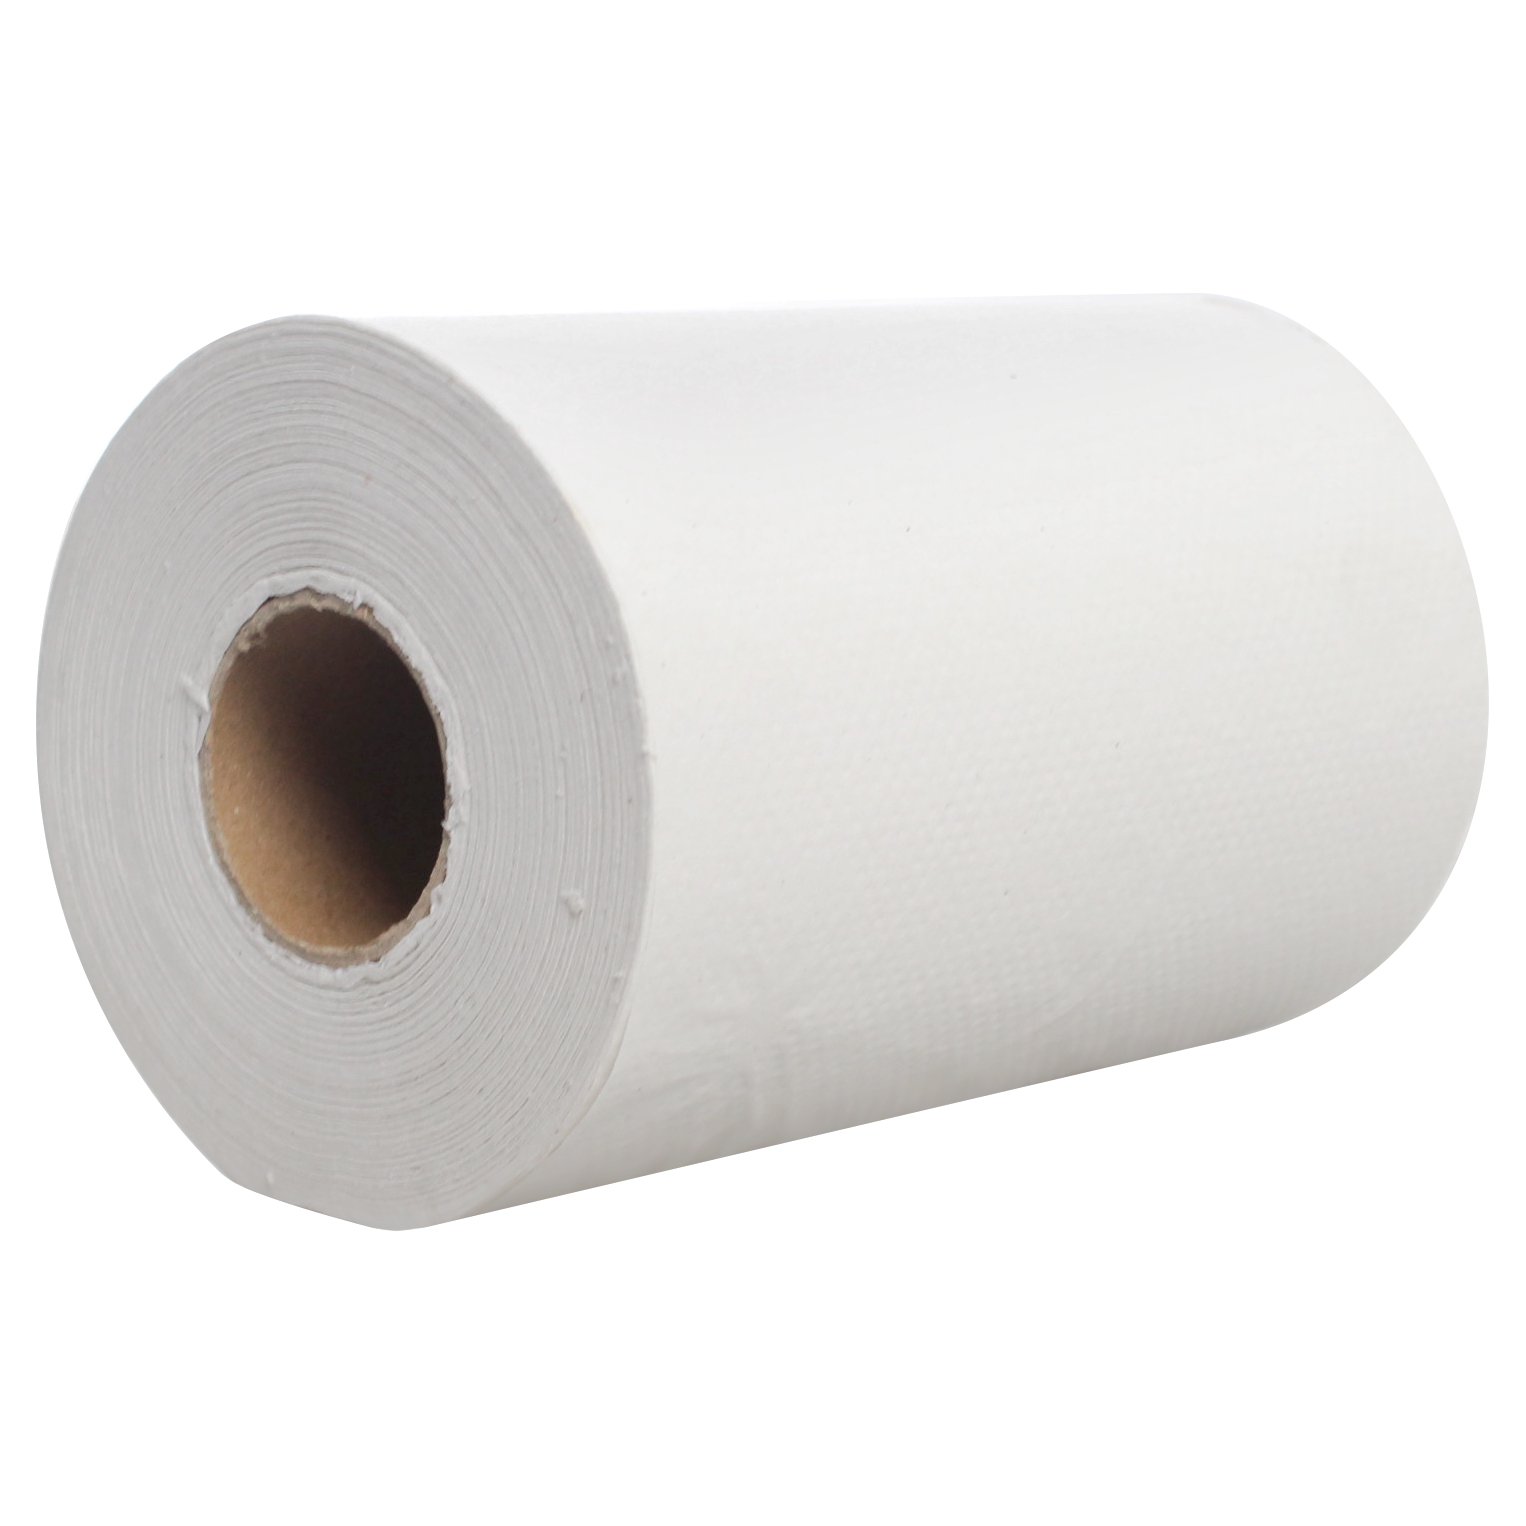 Karat JS-RTW350 Junior Paper Towel Roll, White (Pack of 12)